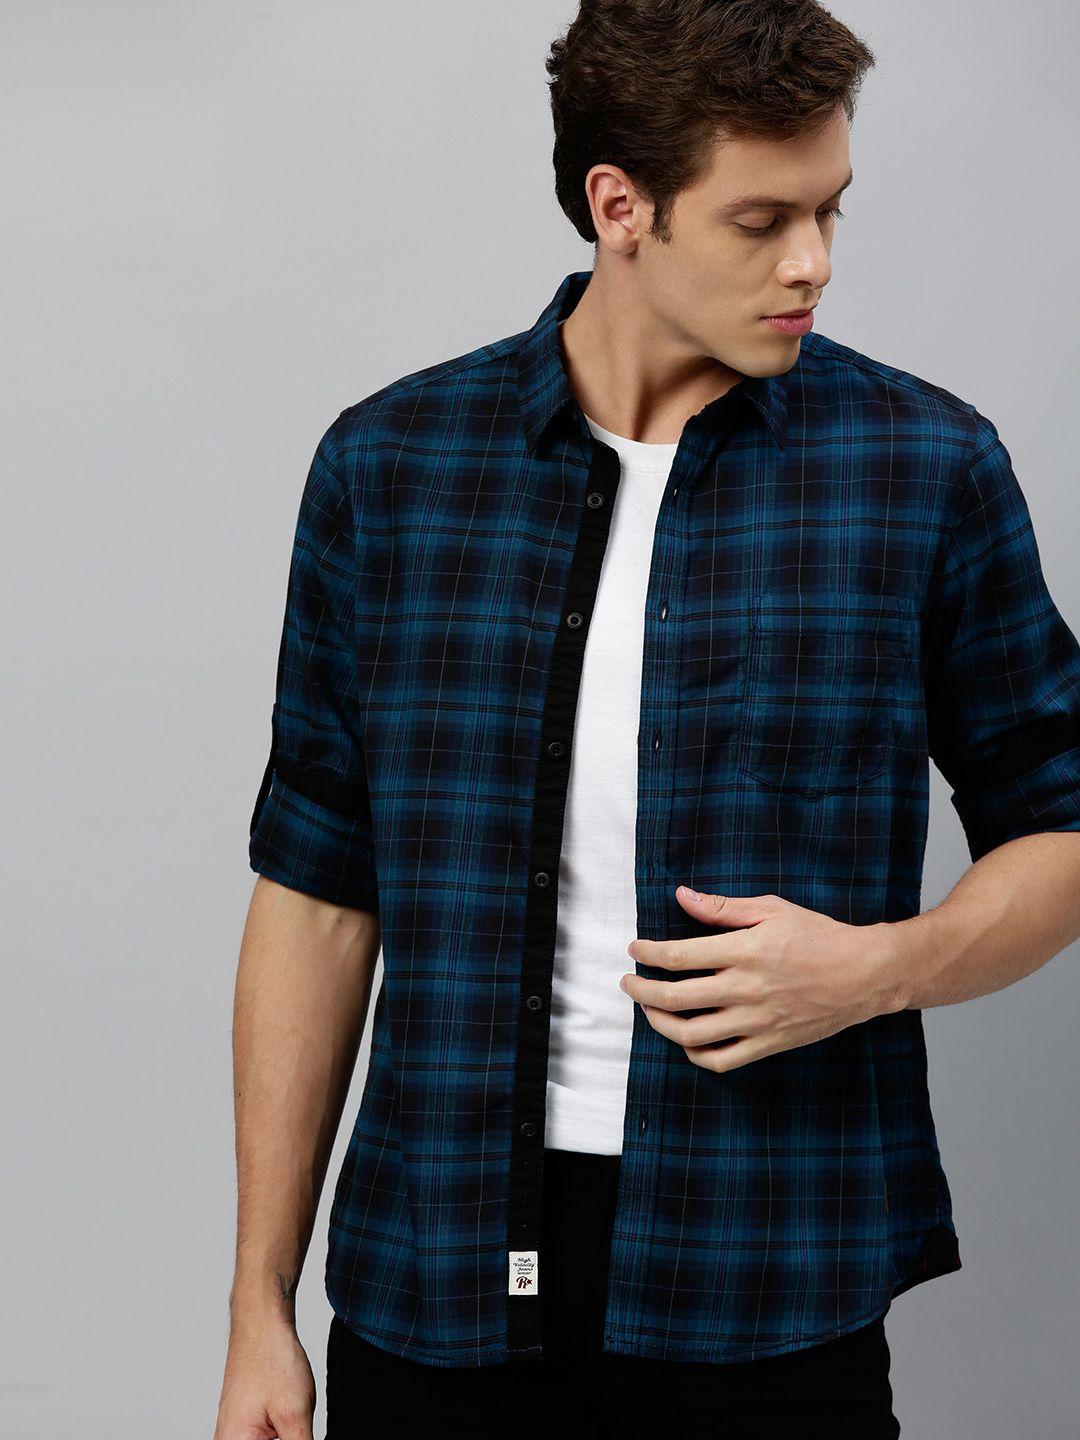 roadster-men-teal-blue-&-black-regular-fit-checked-casual-shirt